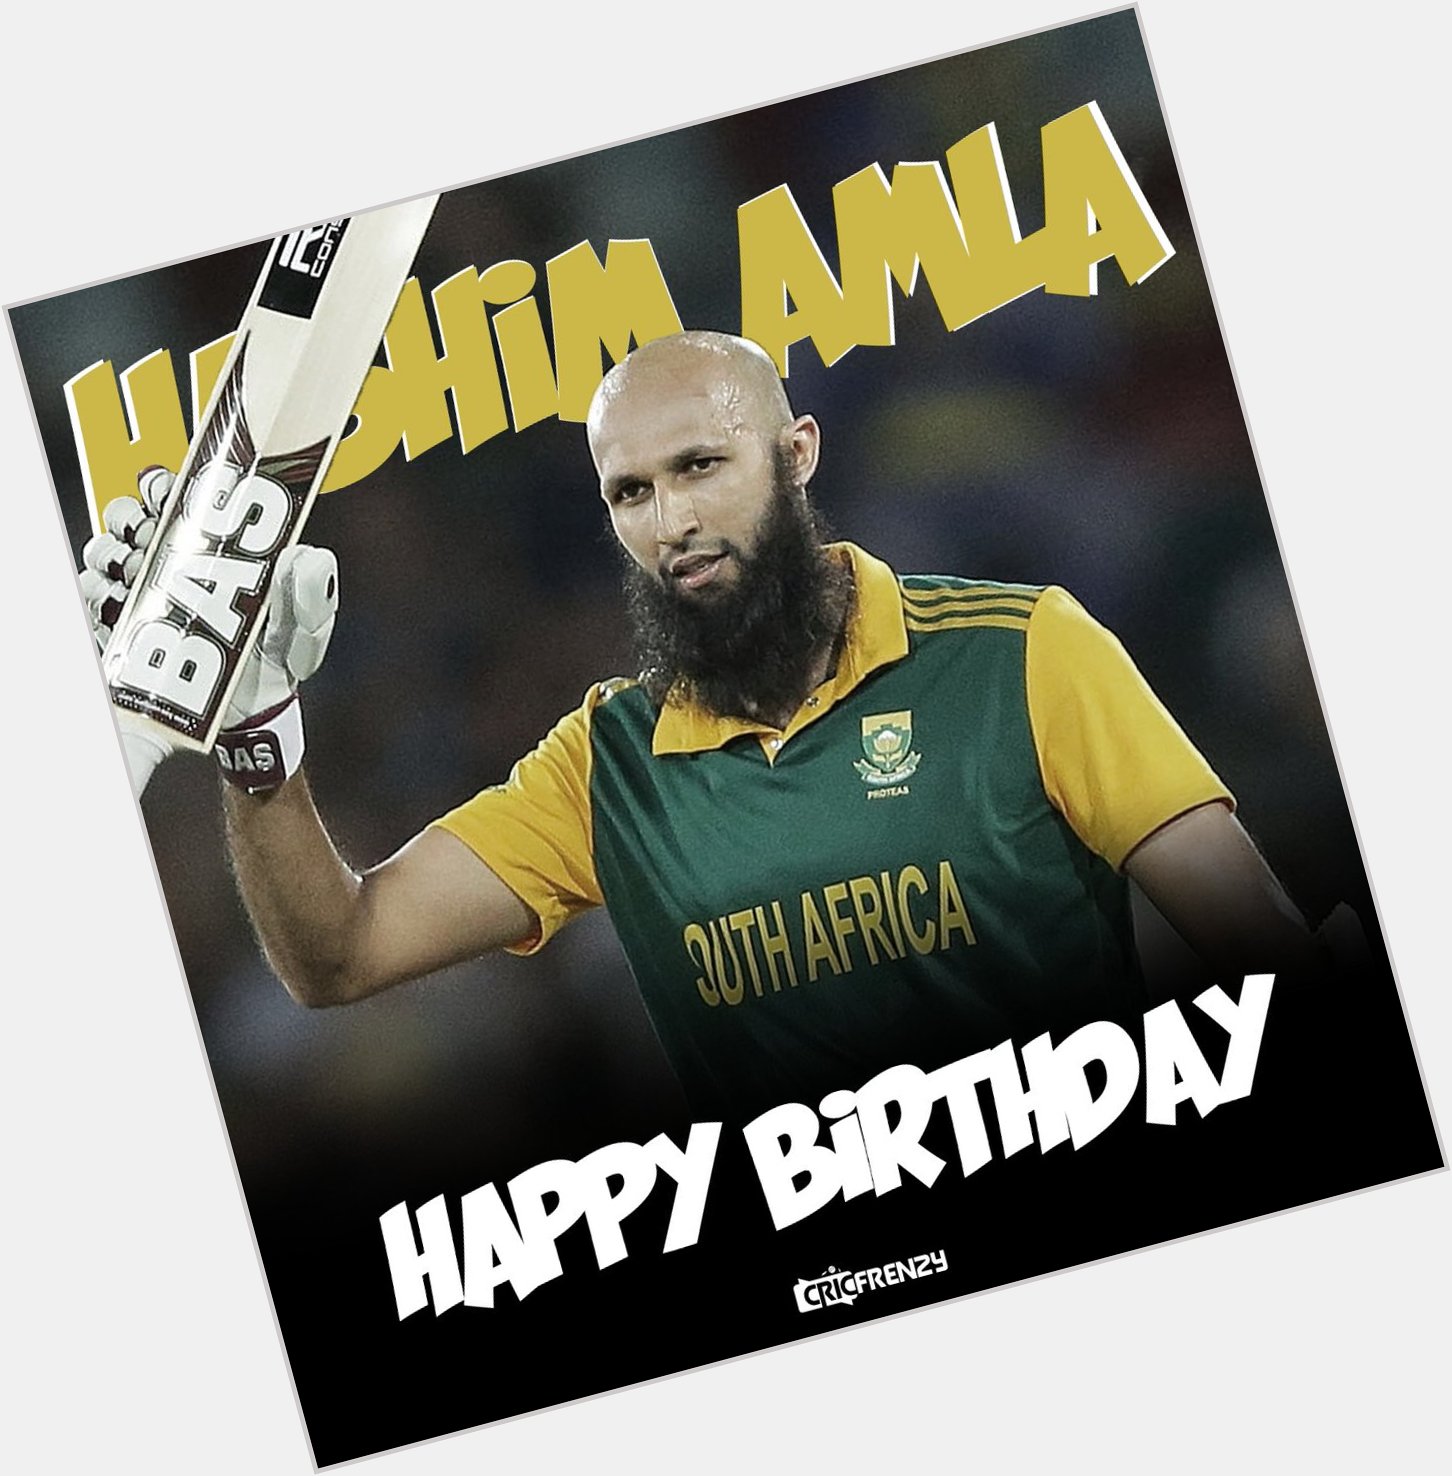 Fastest ever to score 2000, 3000, 4000, 5000, 6000 and 7000 runs in ODI
Happy birthday Hashim Amla    